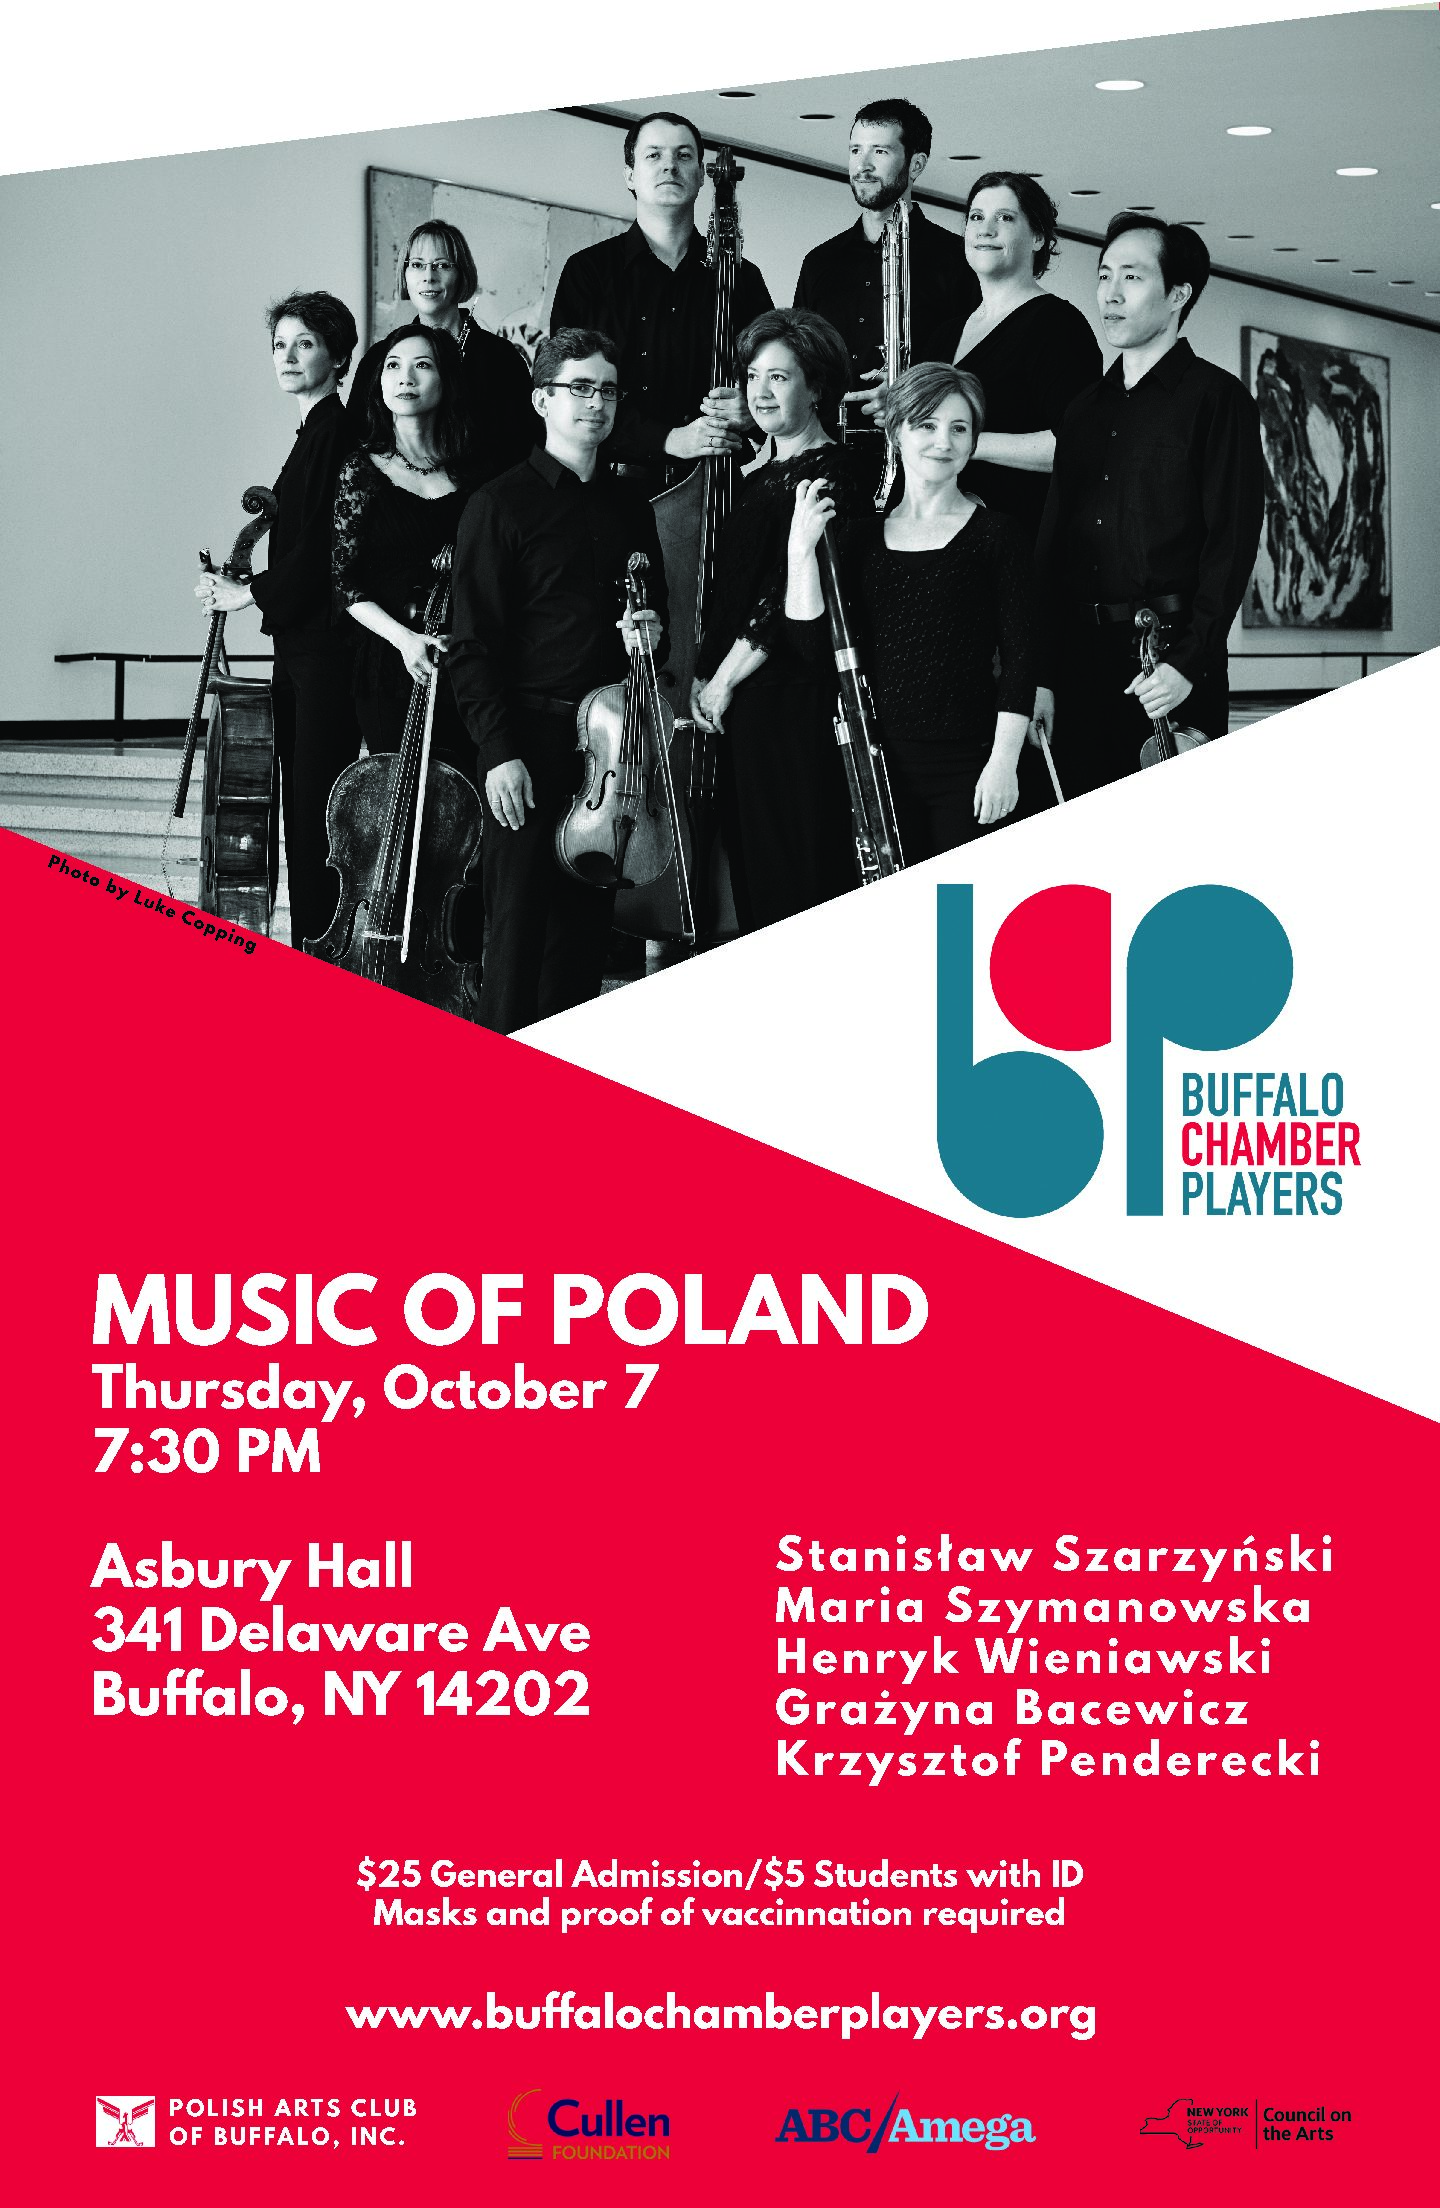 Buffalo Chamber Players: The Music of Poland